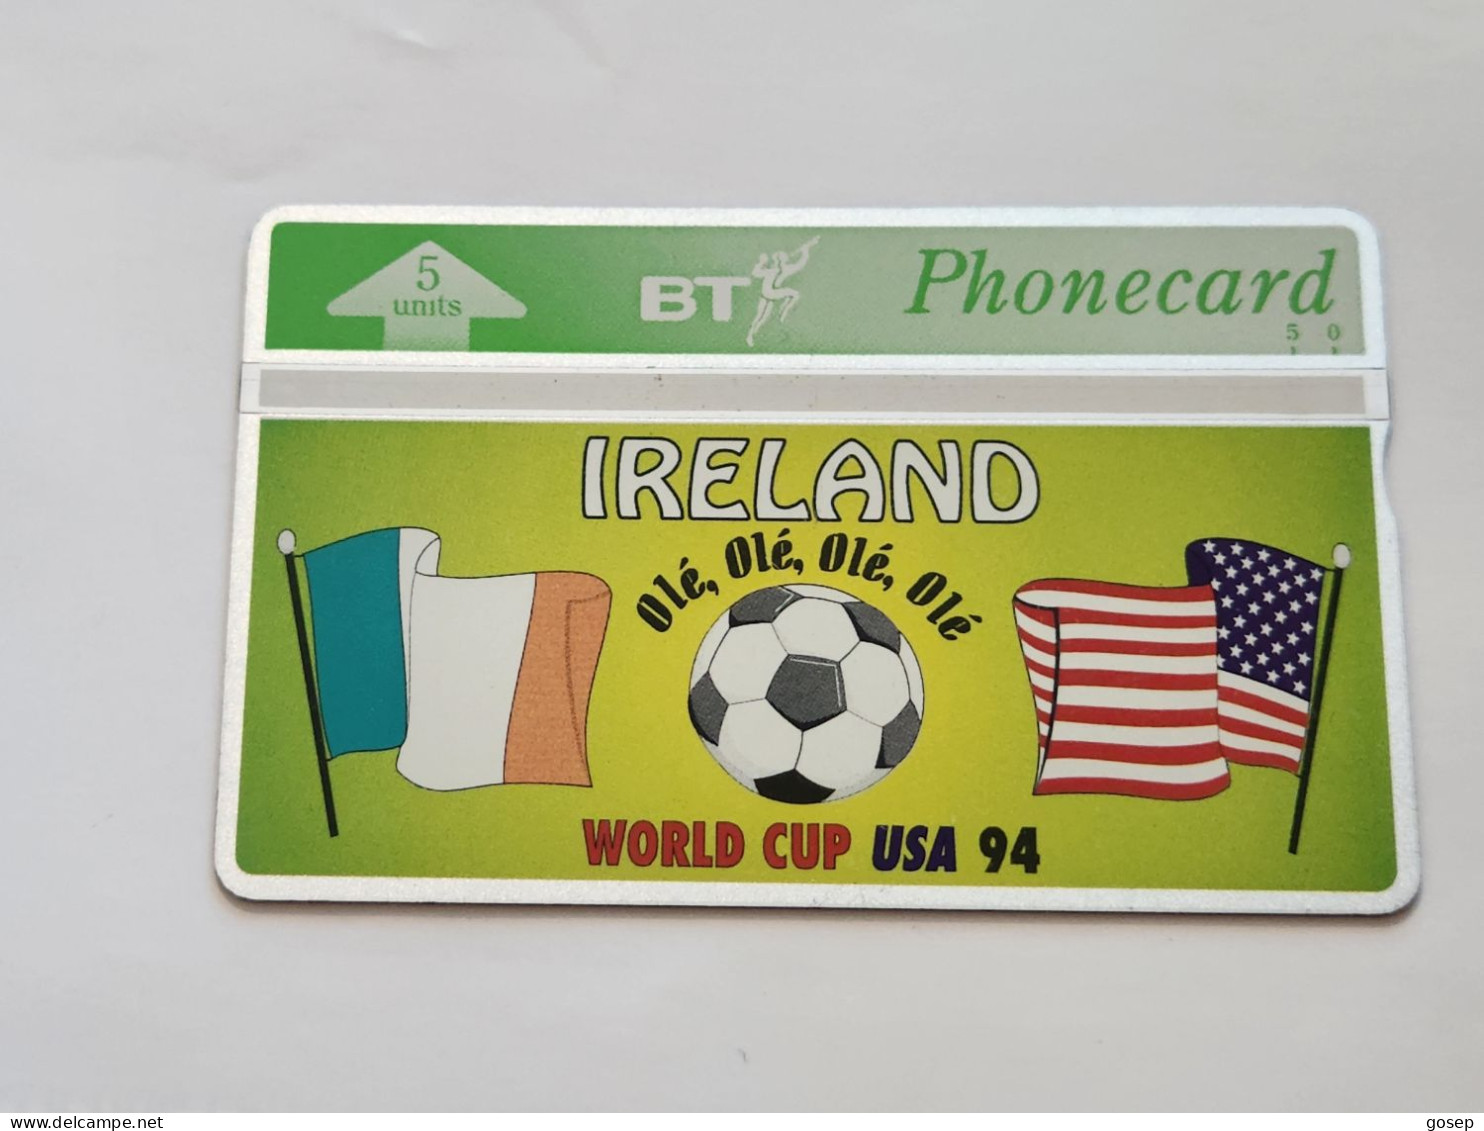 United Kingdom-(BTG-272)-Ireland World Cup-USA-1994-(261)(5units)(403D58107)(tirage-5.000)-price Cataloge-6.00£-mint - BT Edición General